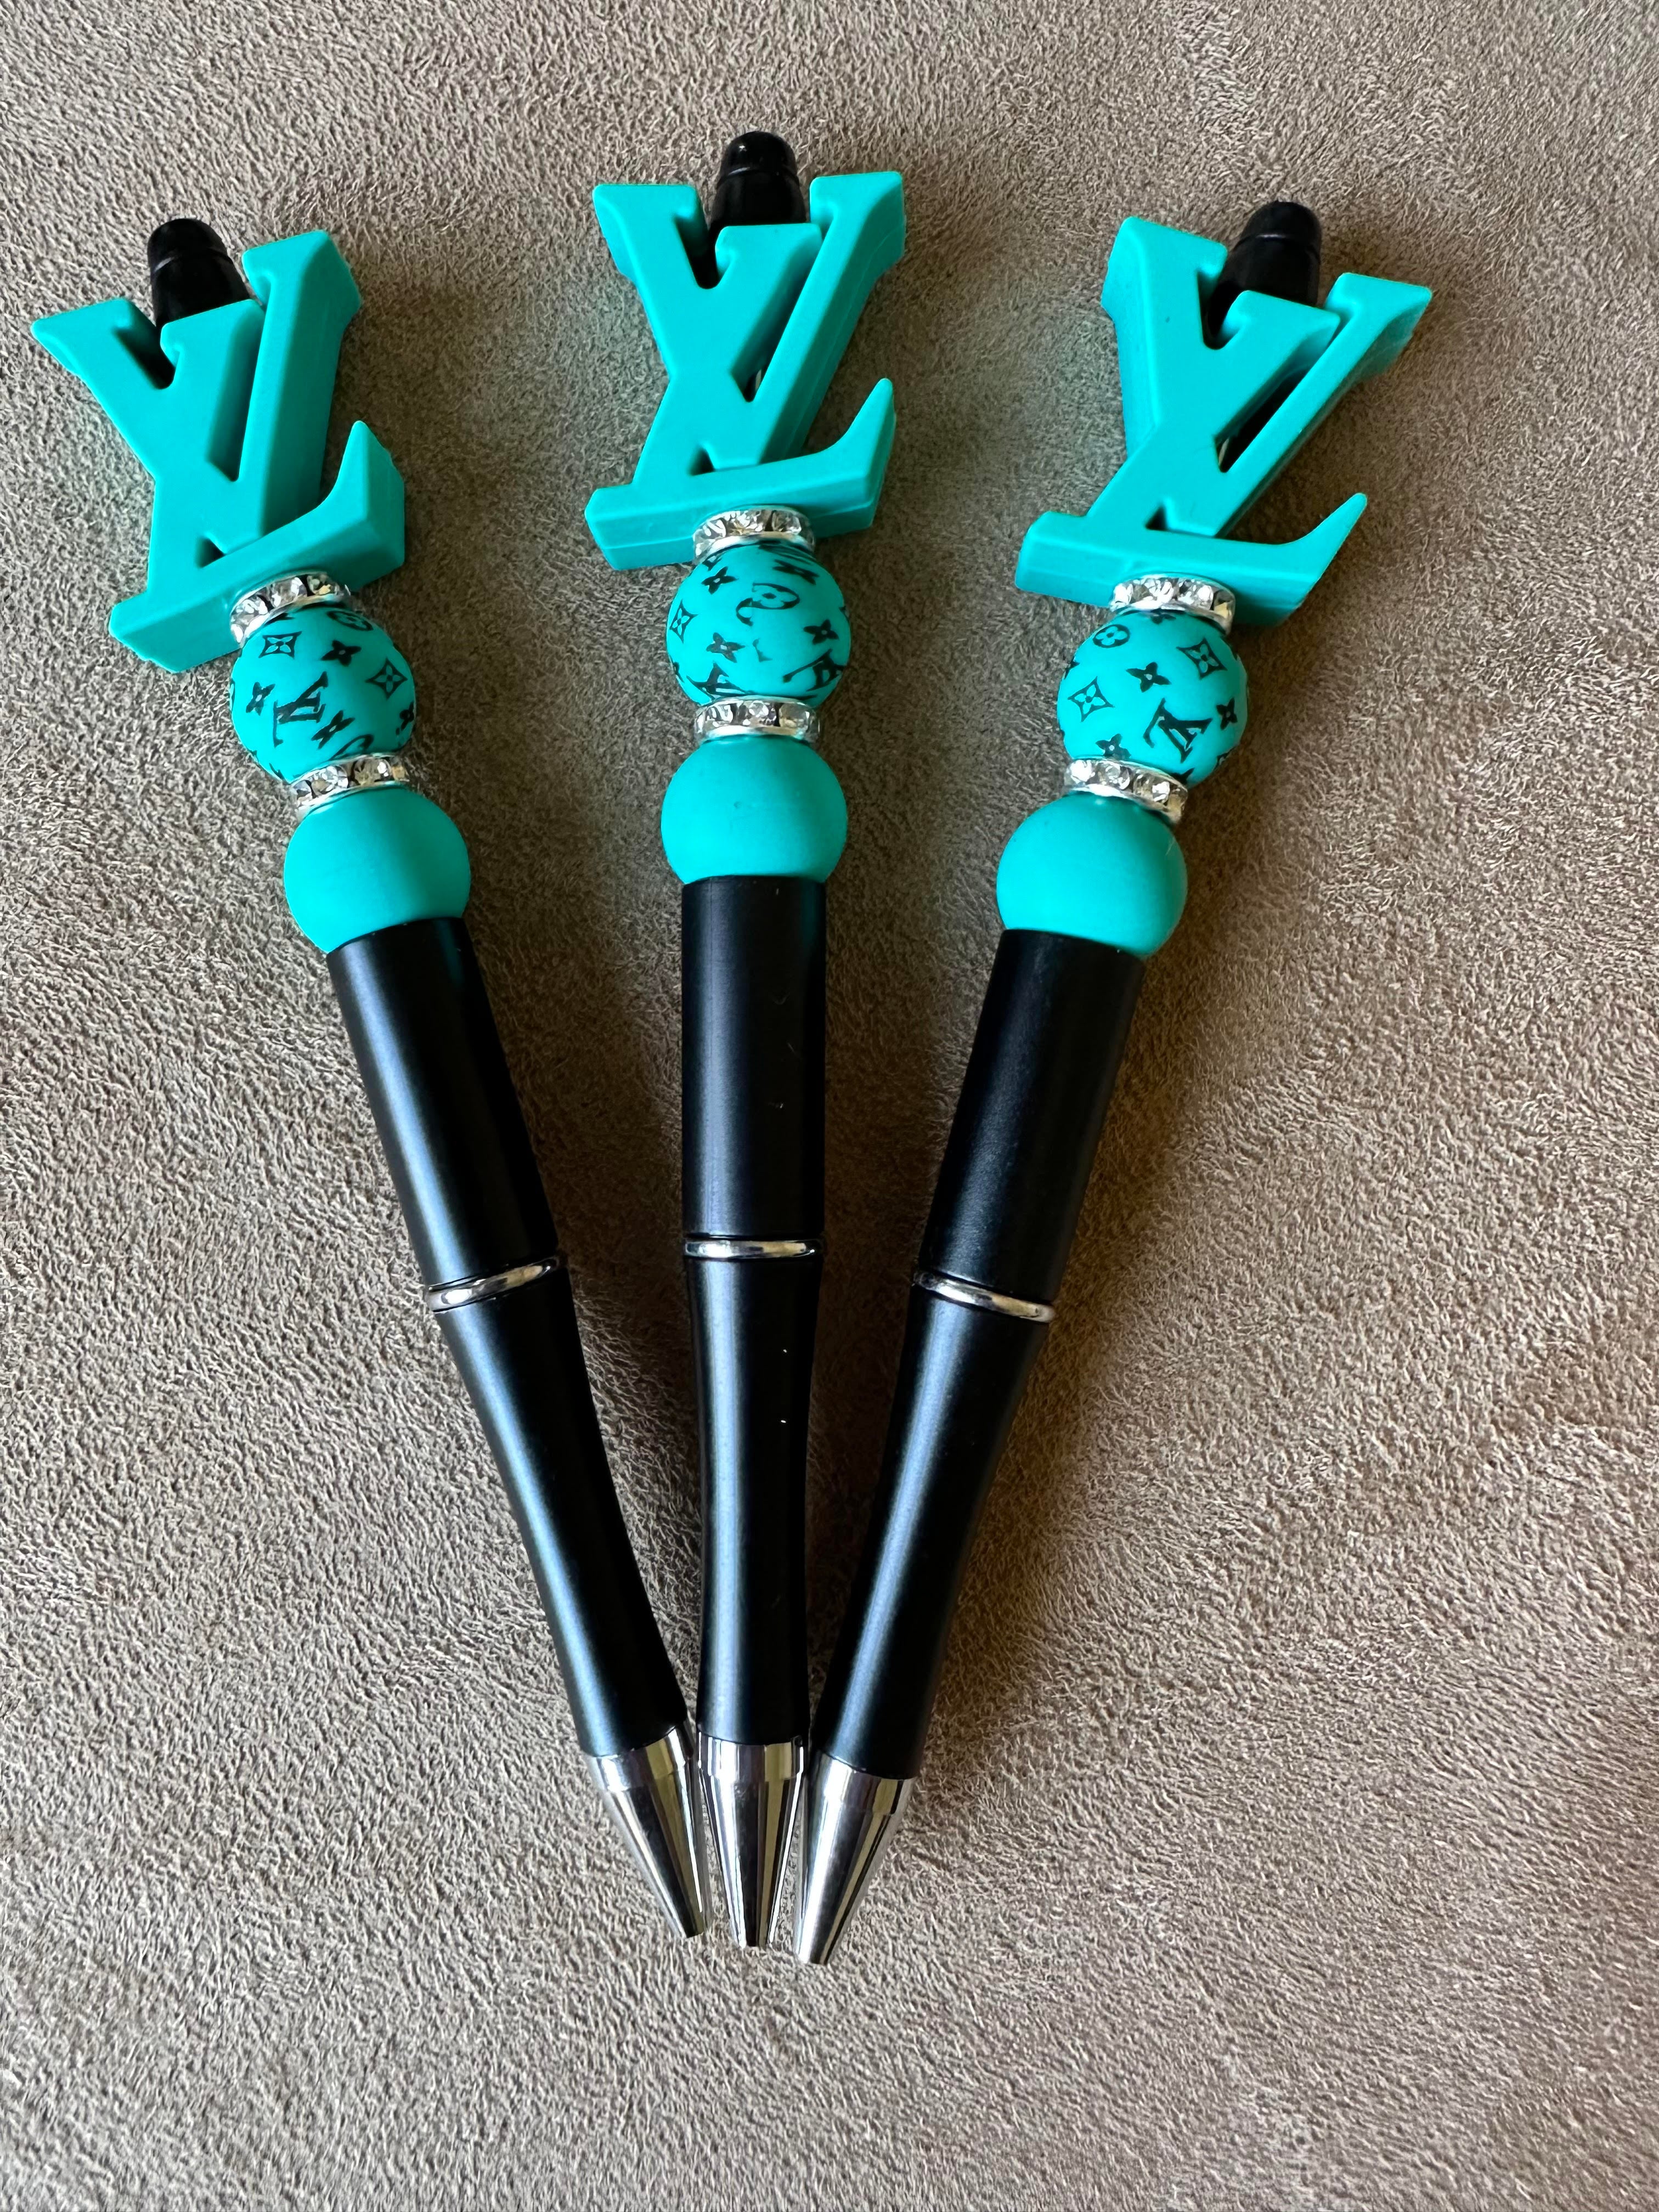 lv beads for pens